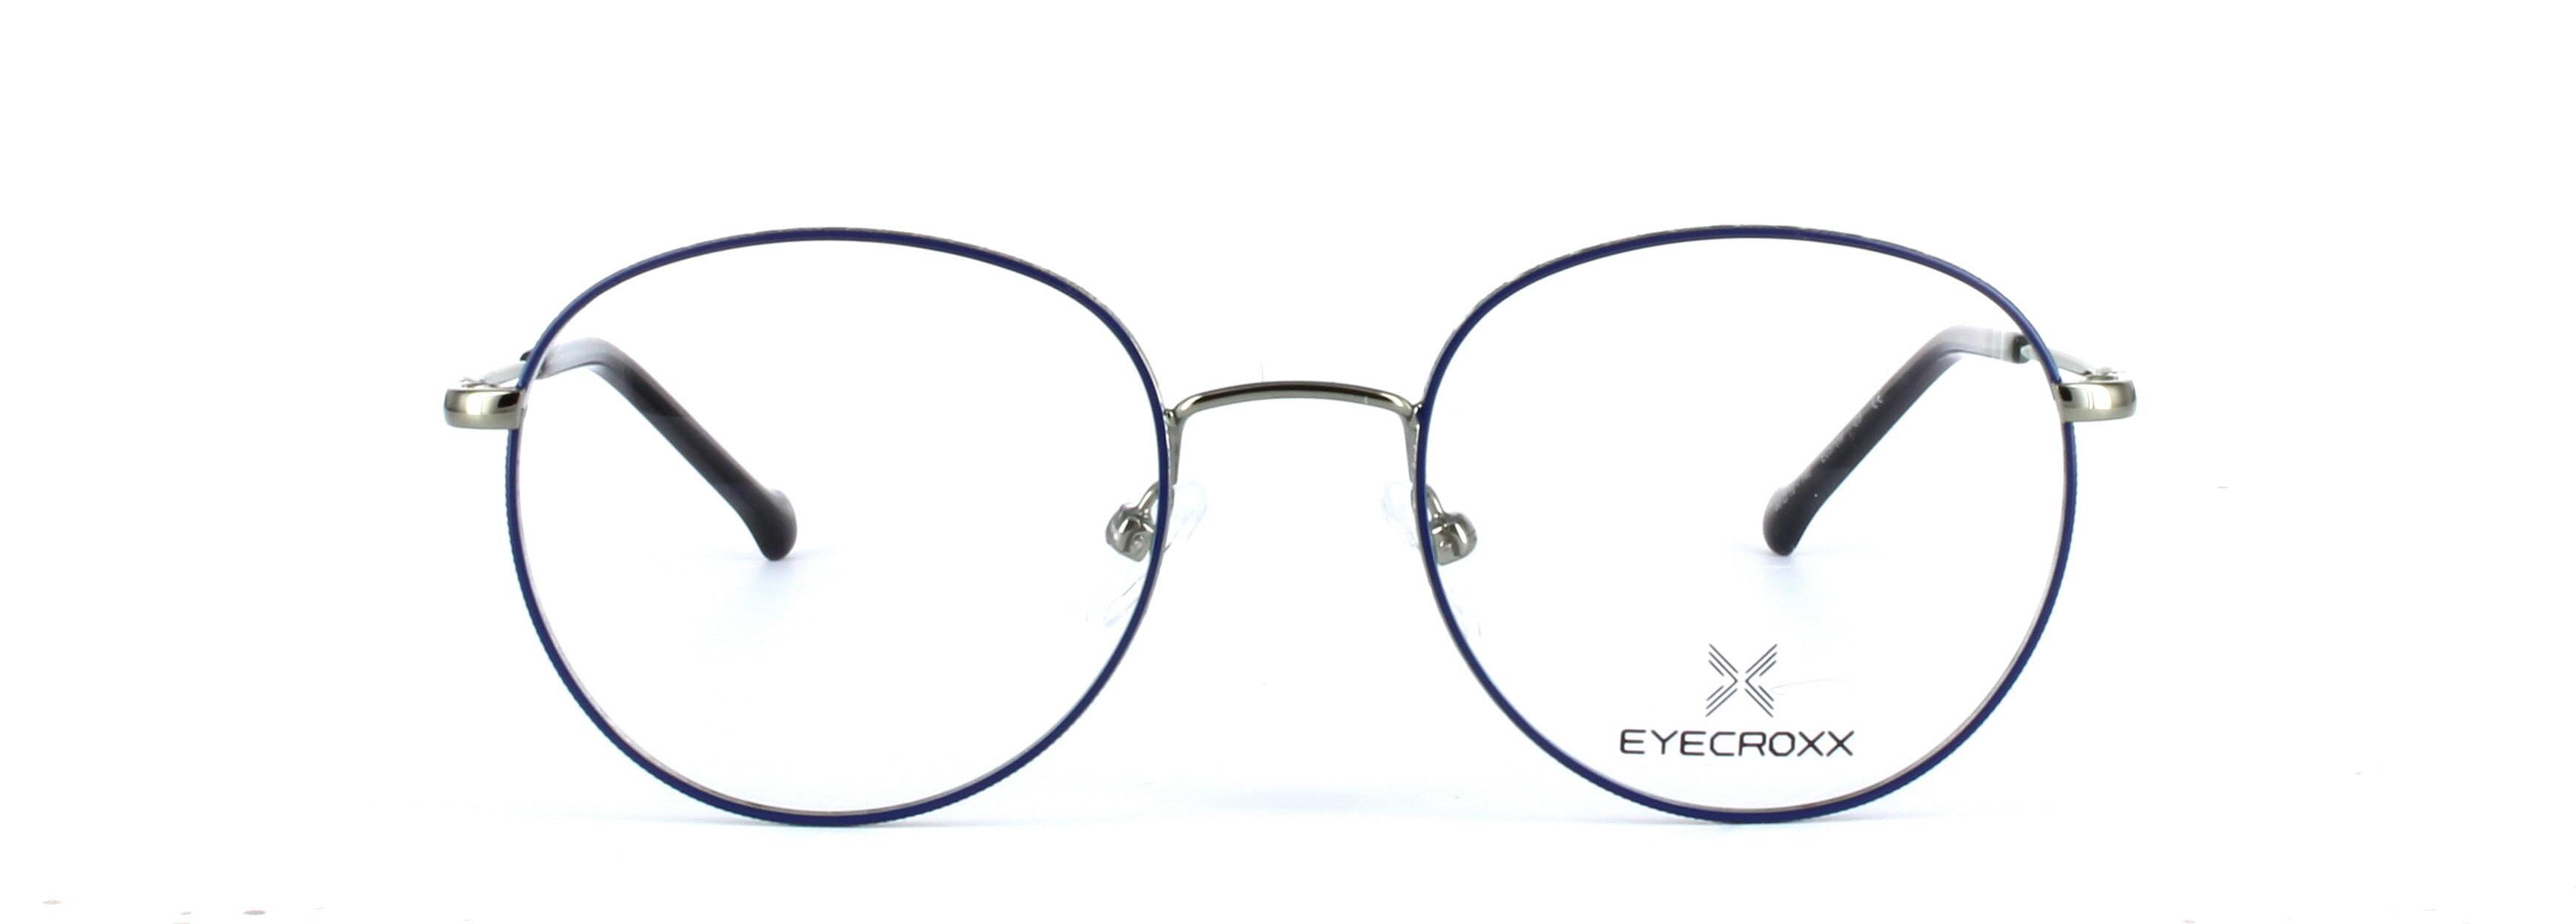 Eyecroxx 570-C3 Blue Full Rim Round Metal Glasses - Image View 5